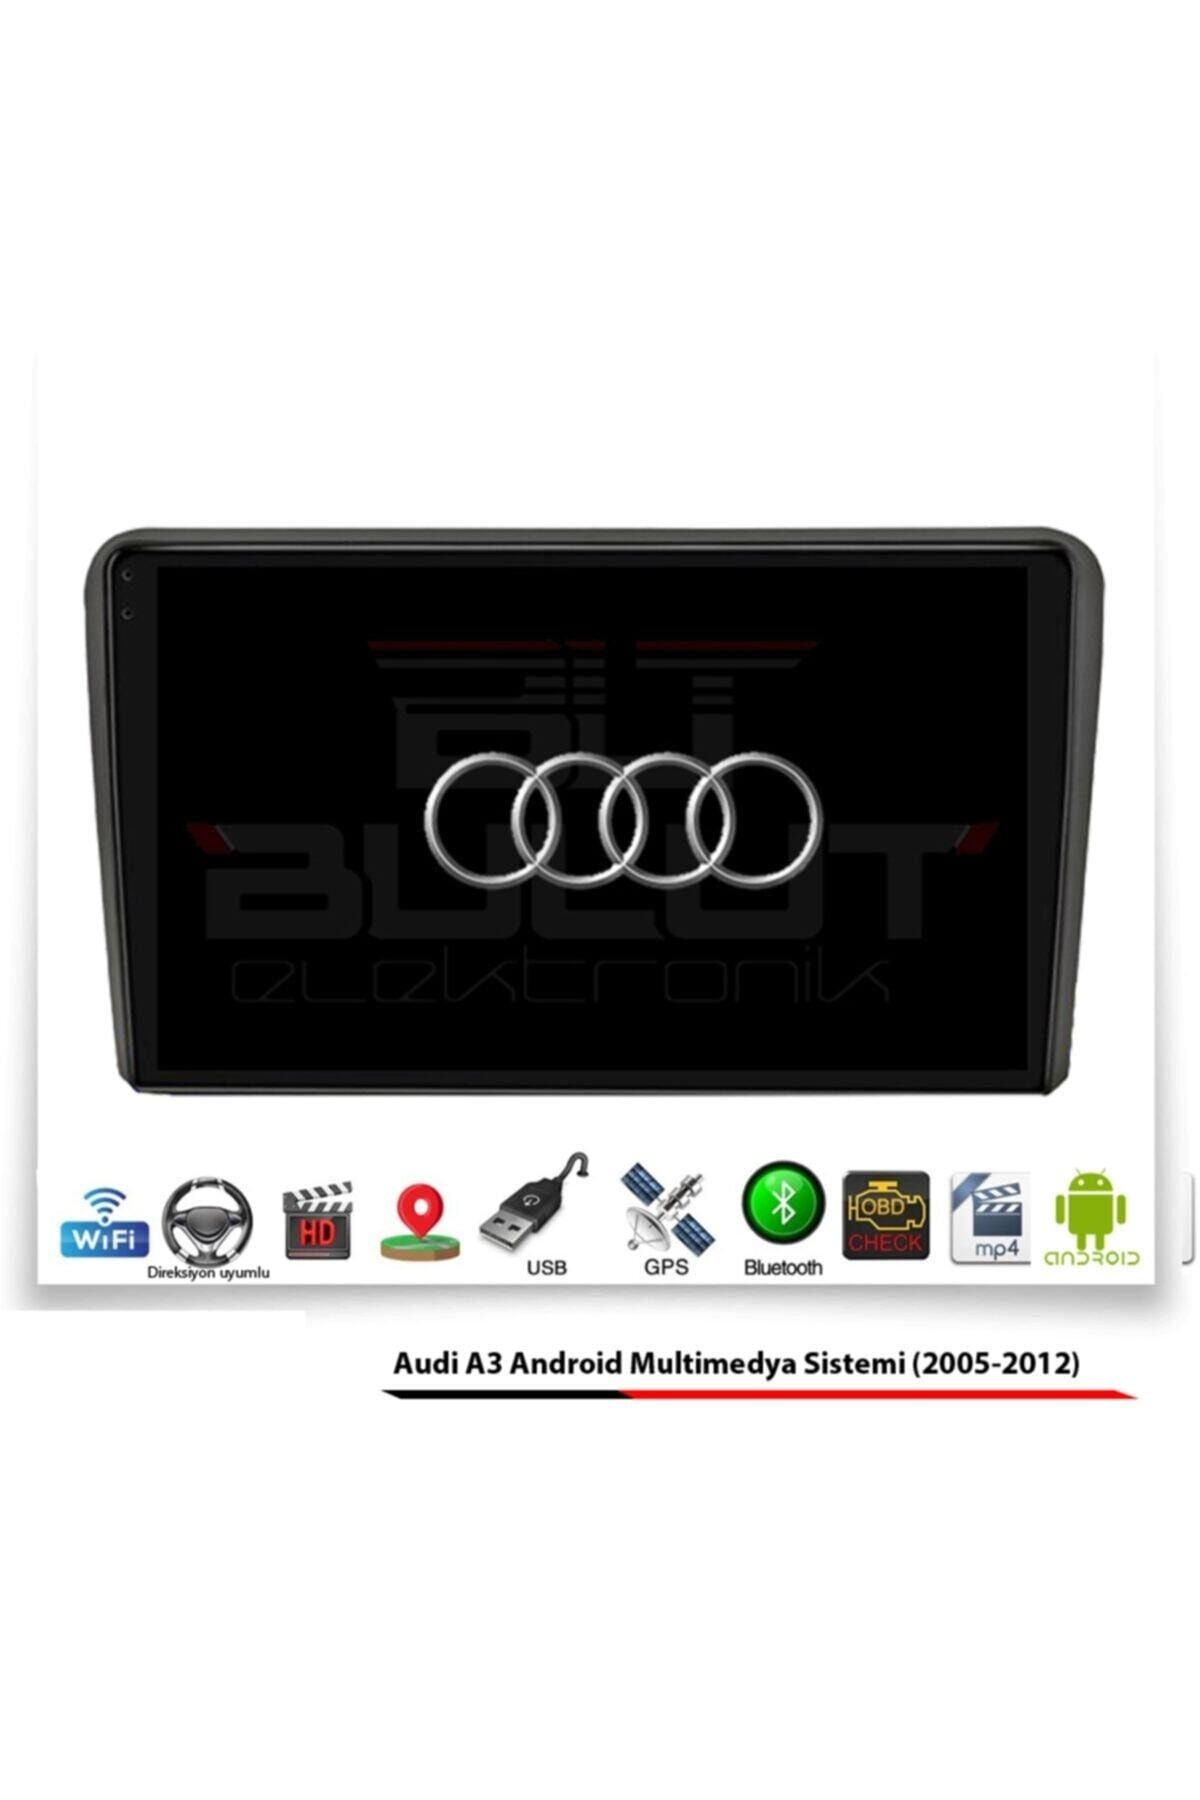 Nakamichi Audi A3 Android Multimedya Oem Sistemi (2005-2012) 4gbram 64cg Hafıza Car Play Airplay Androıd Auto